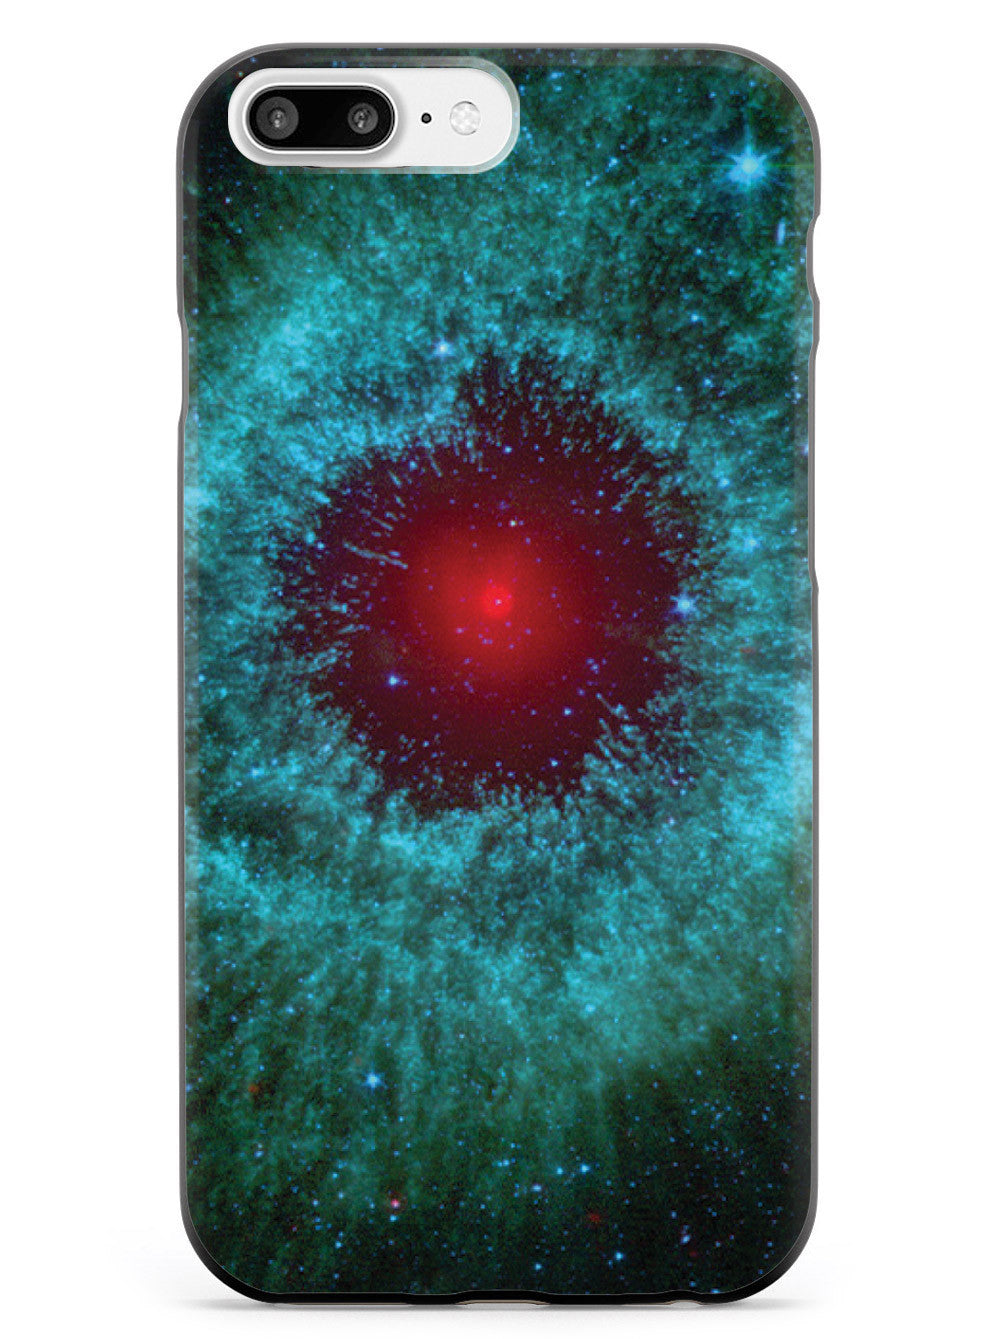 Helix Nebula Outer Space Planetary Eye of God Case